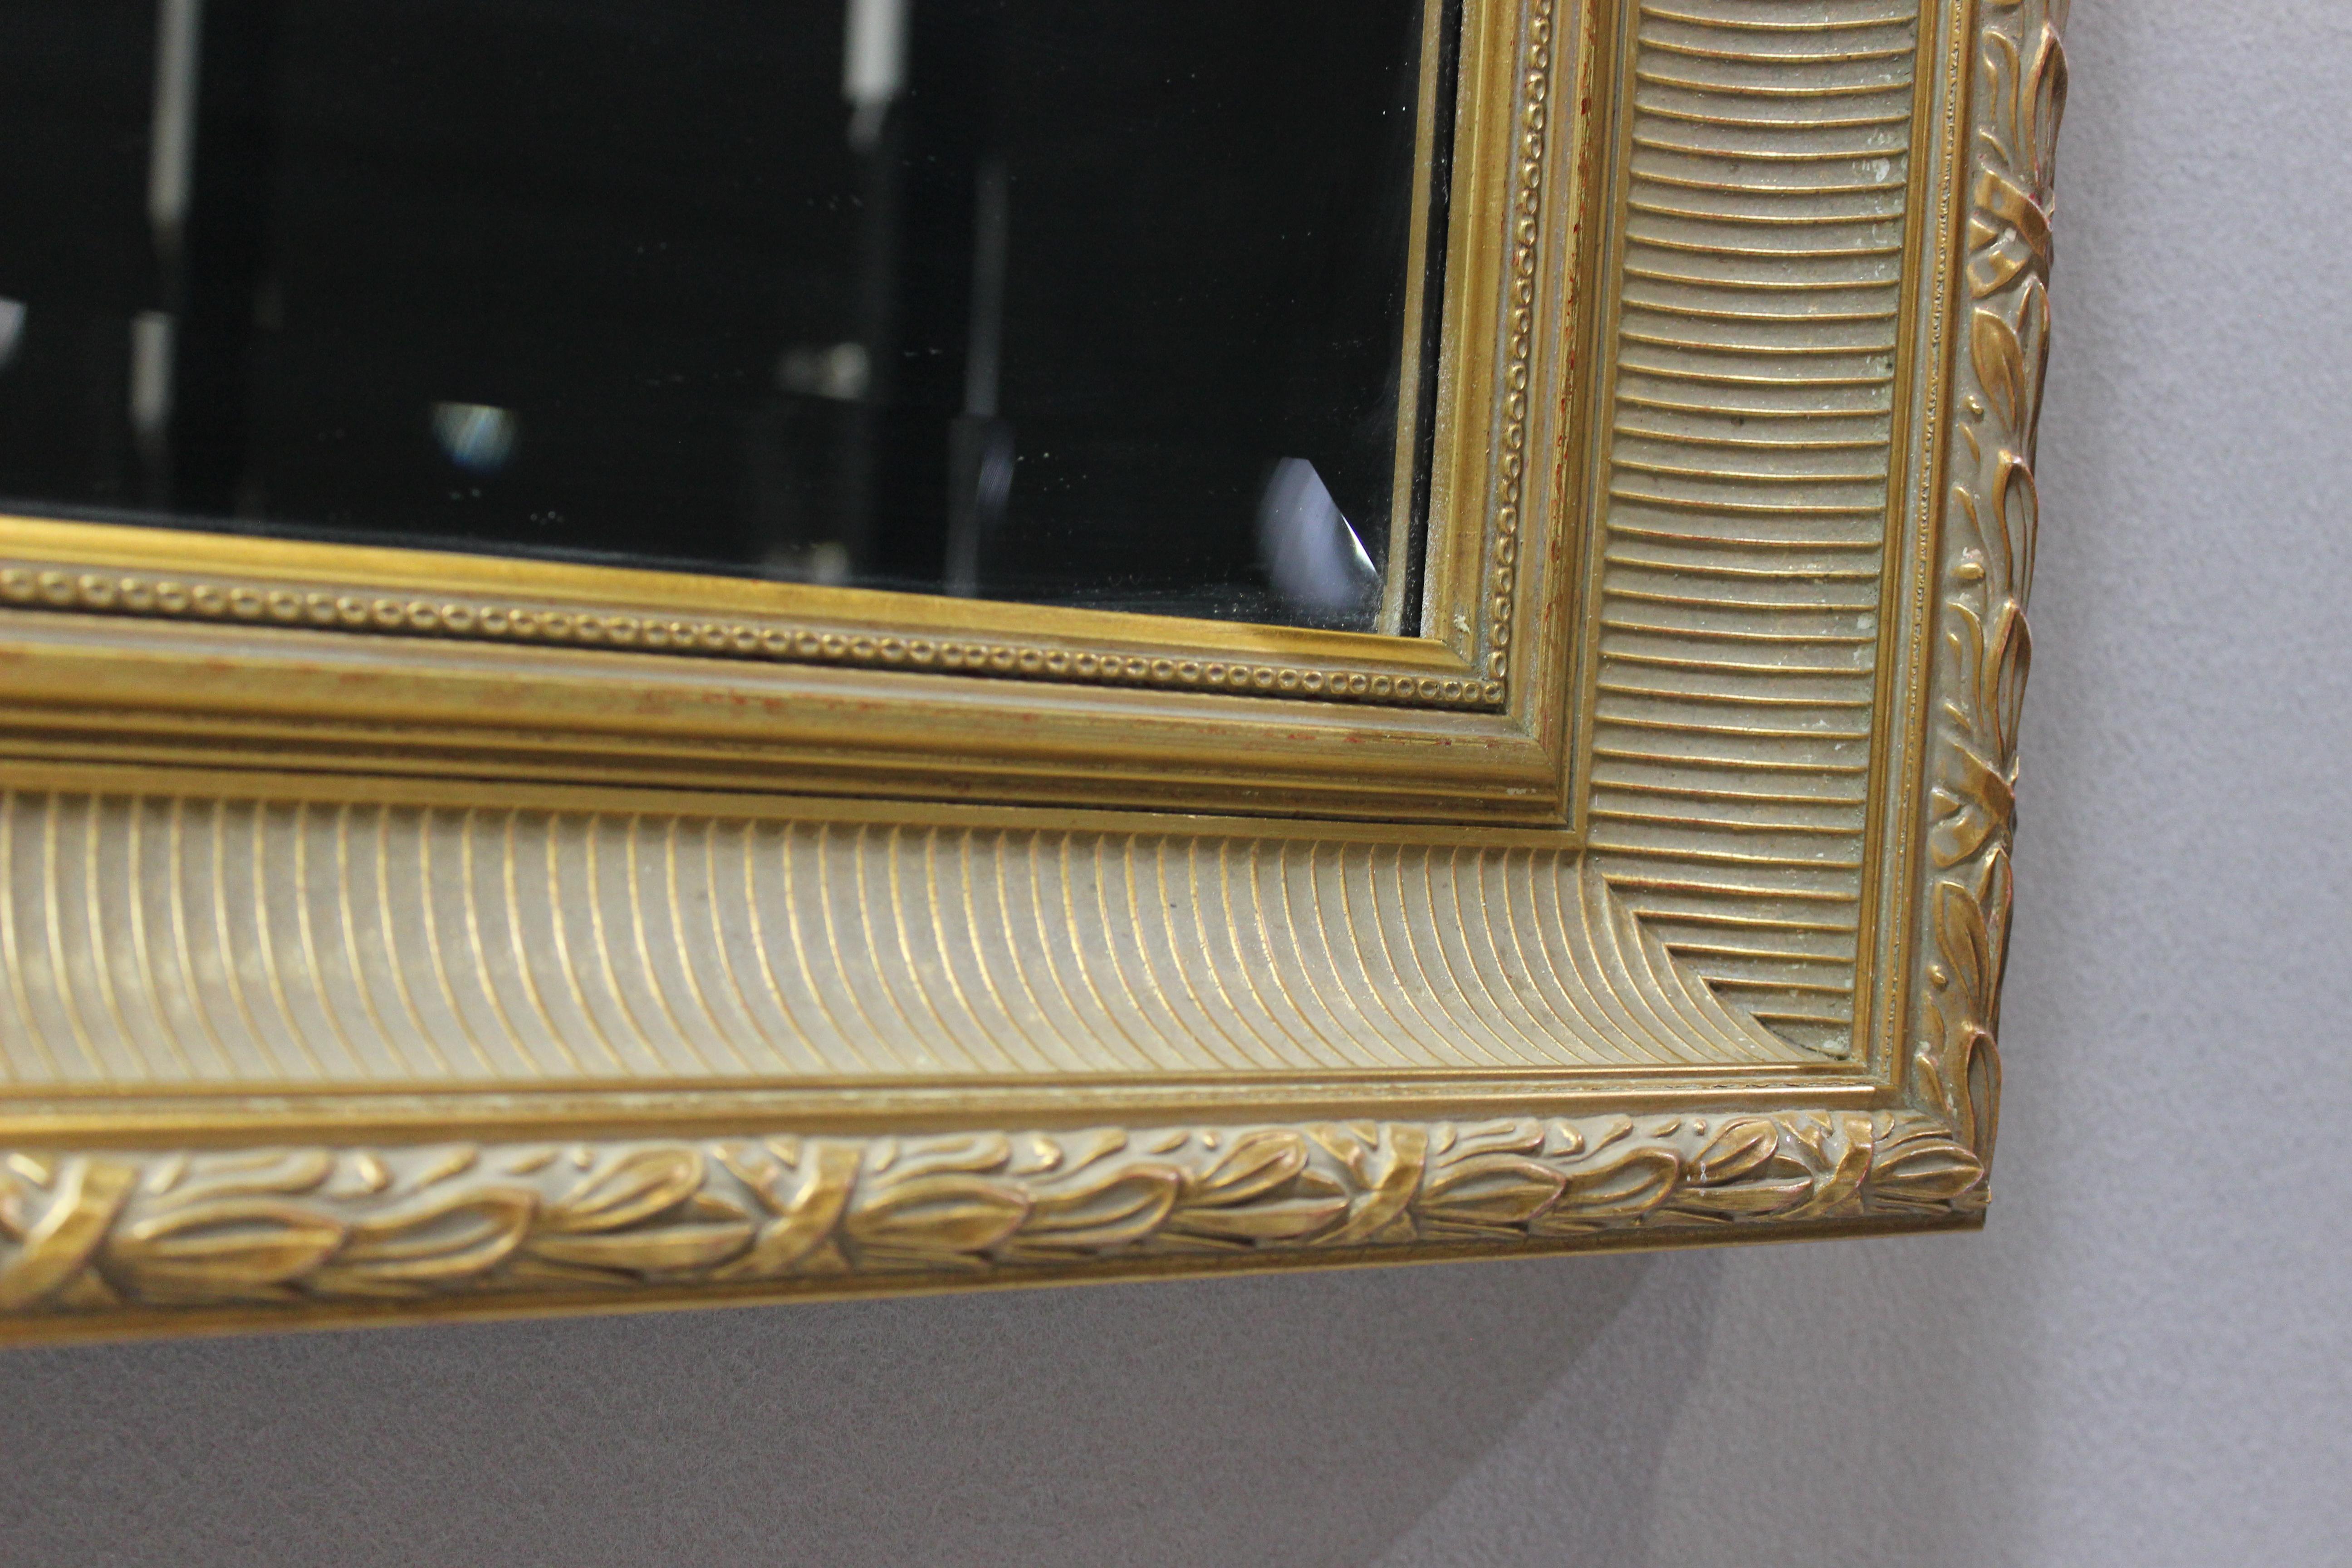 Italian Renaissance mirror - gilded wood over rouge royal - beveled glass -.